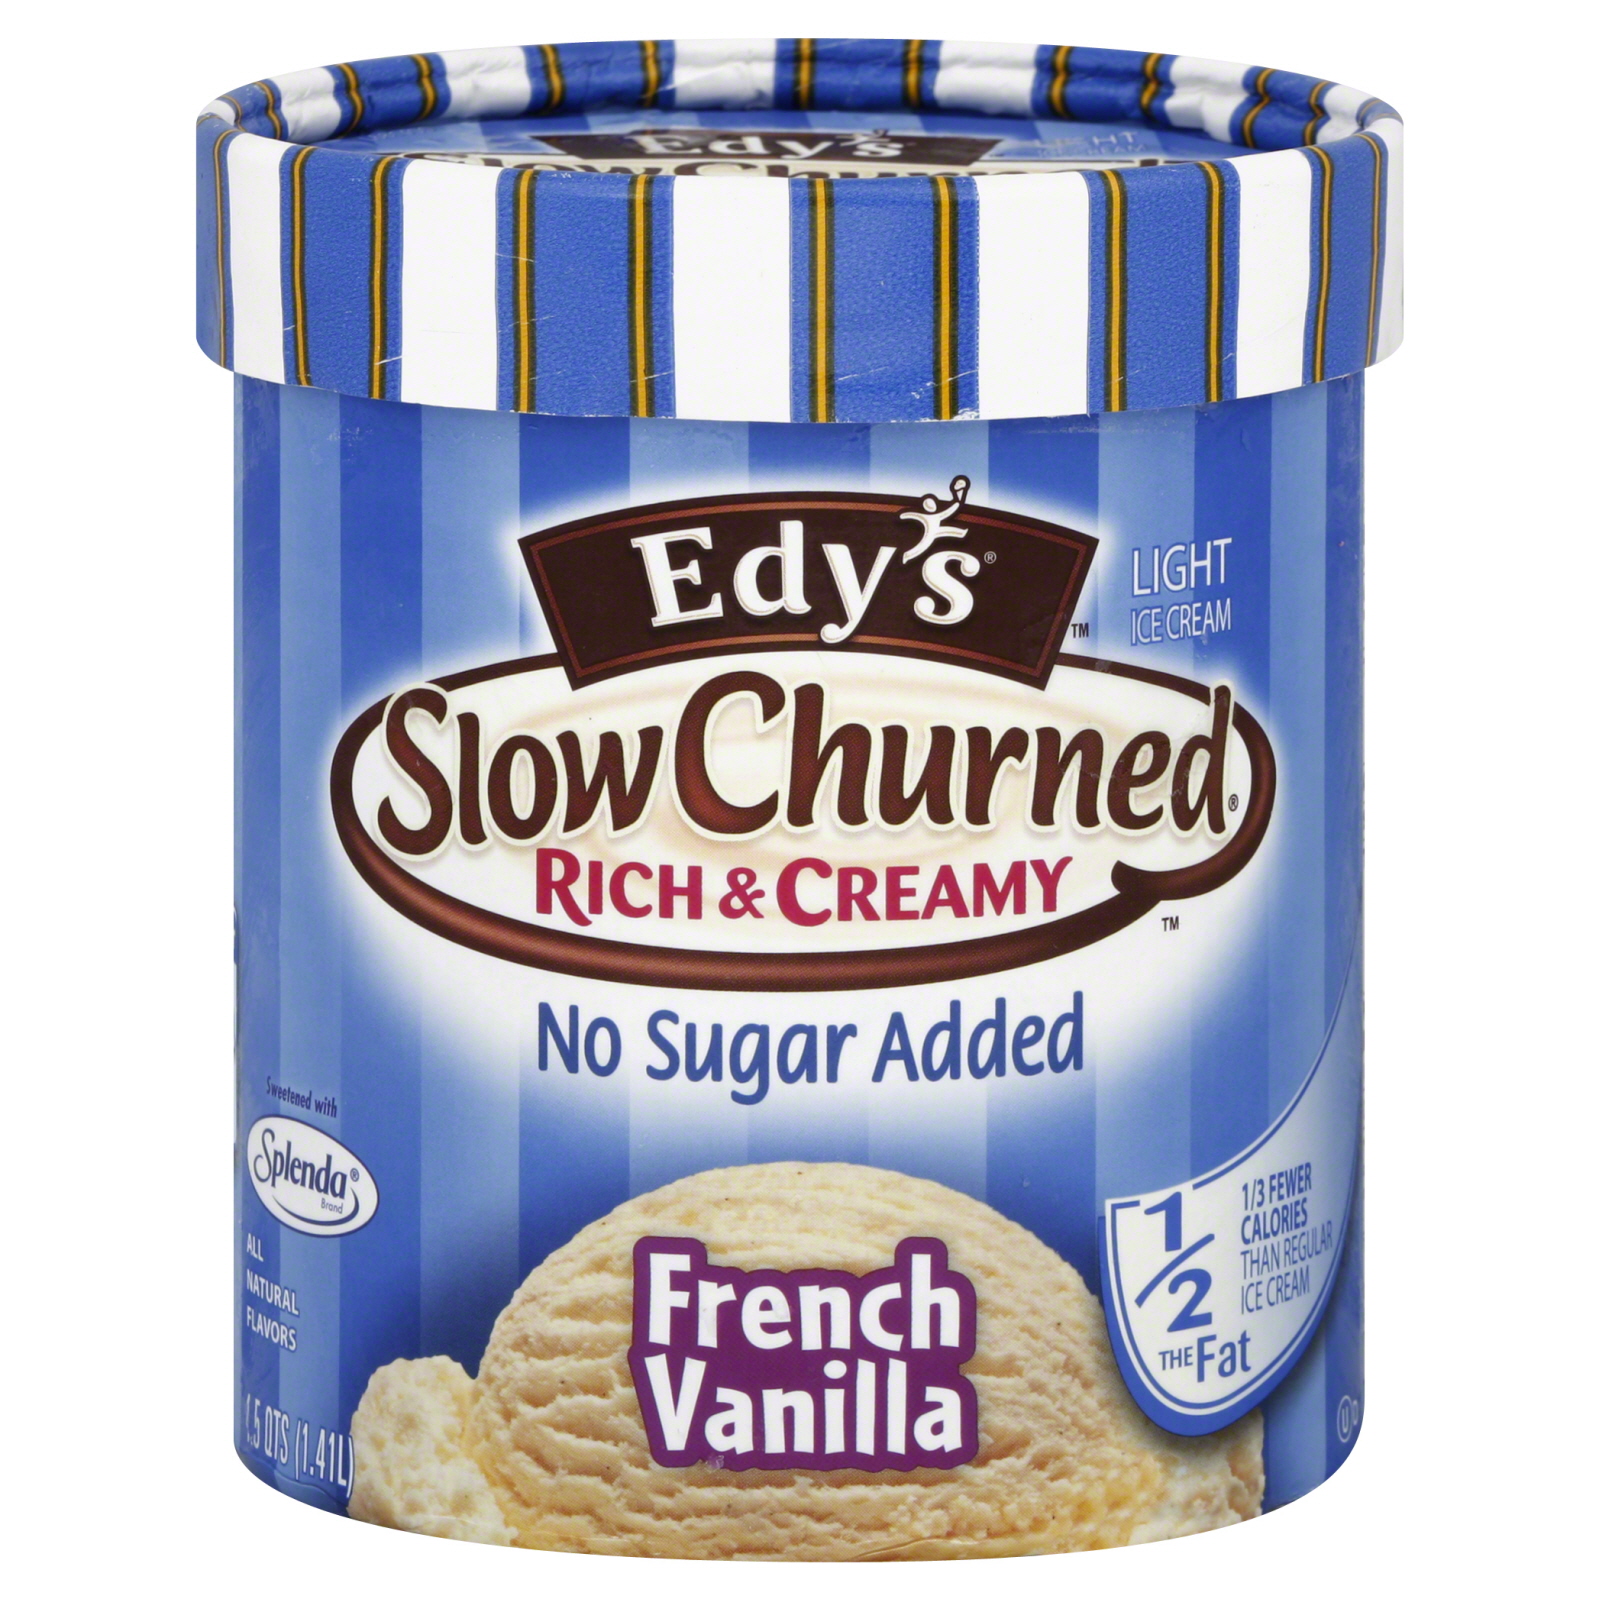 Edy's Slow Churned Ice Cream, Light, No Sugar Added, French Vanilla, 1.5 qt (1.41 lt)